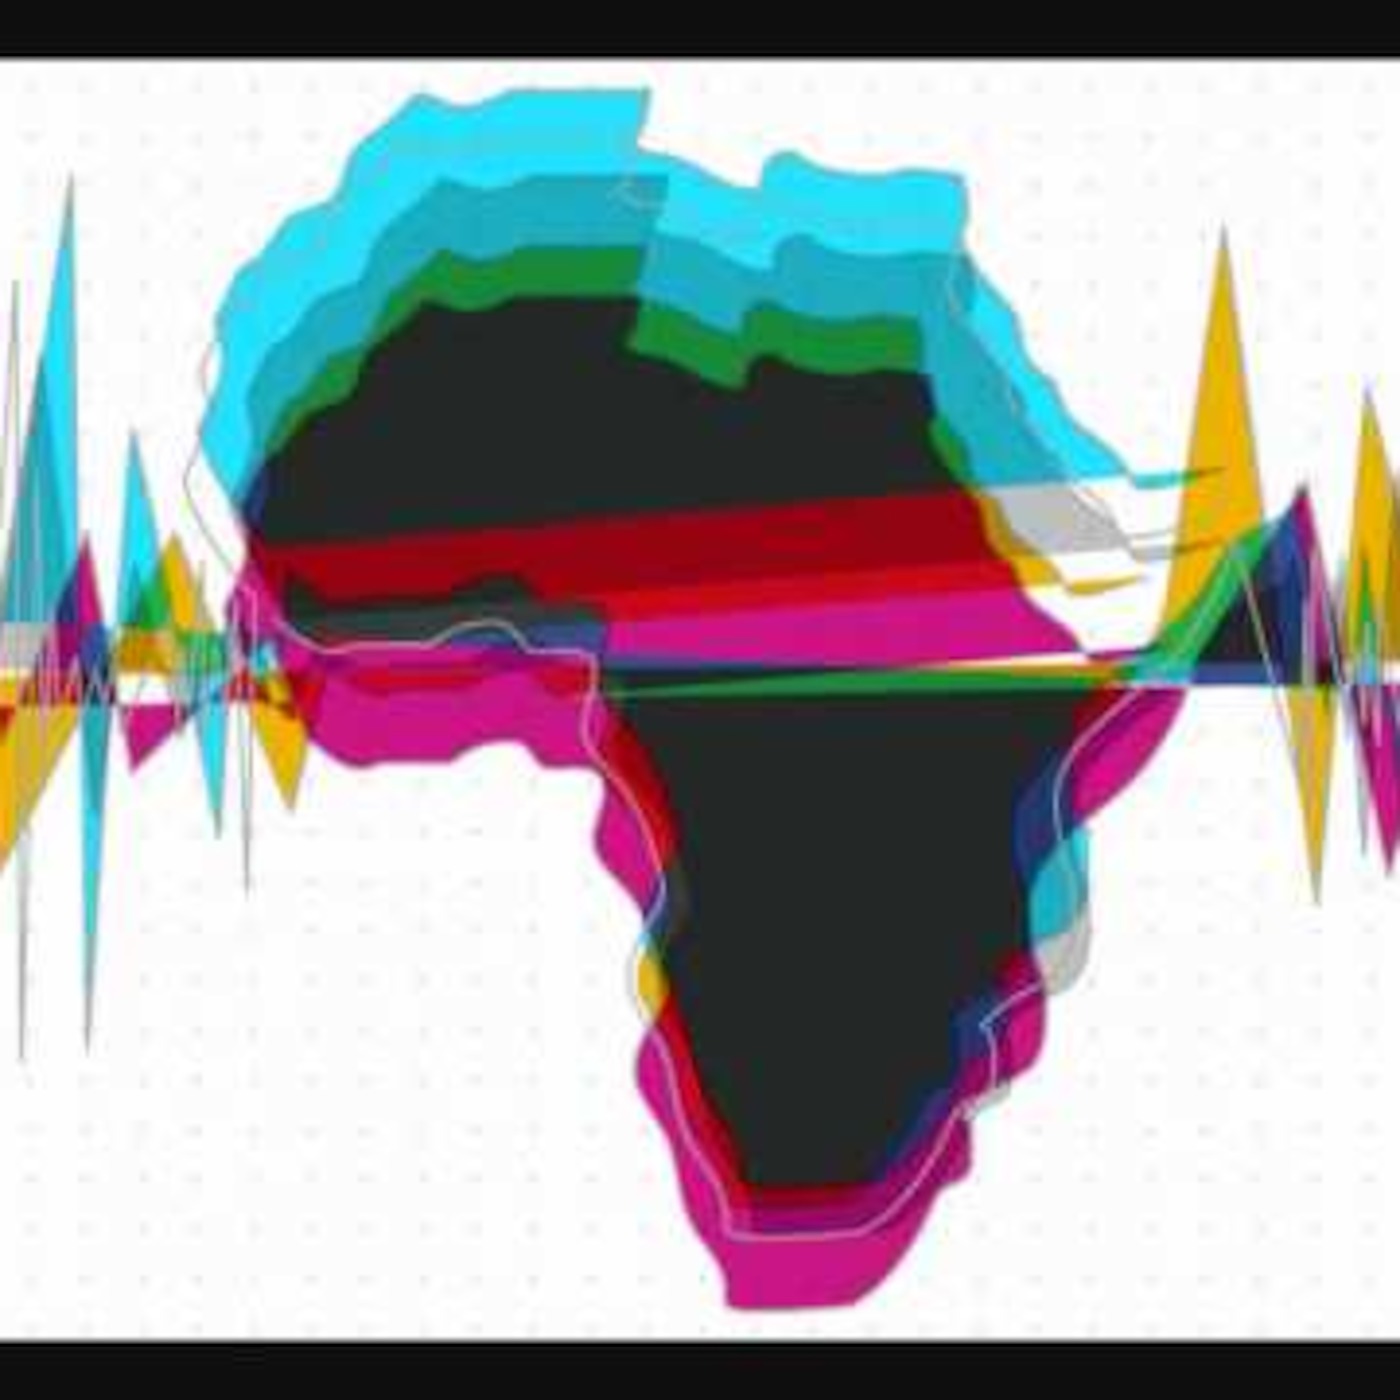 AfroPop Radio